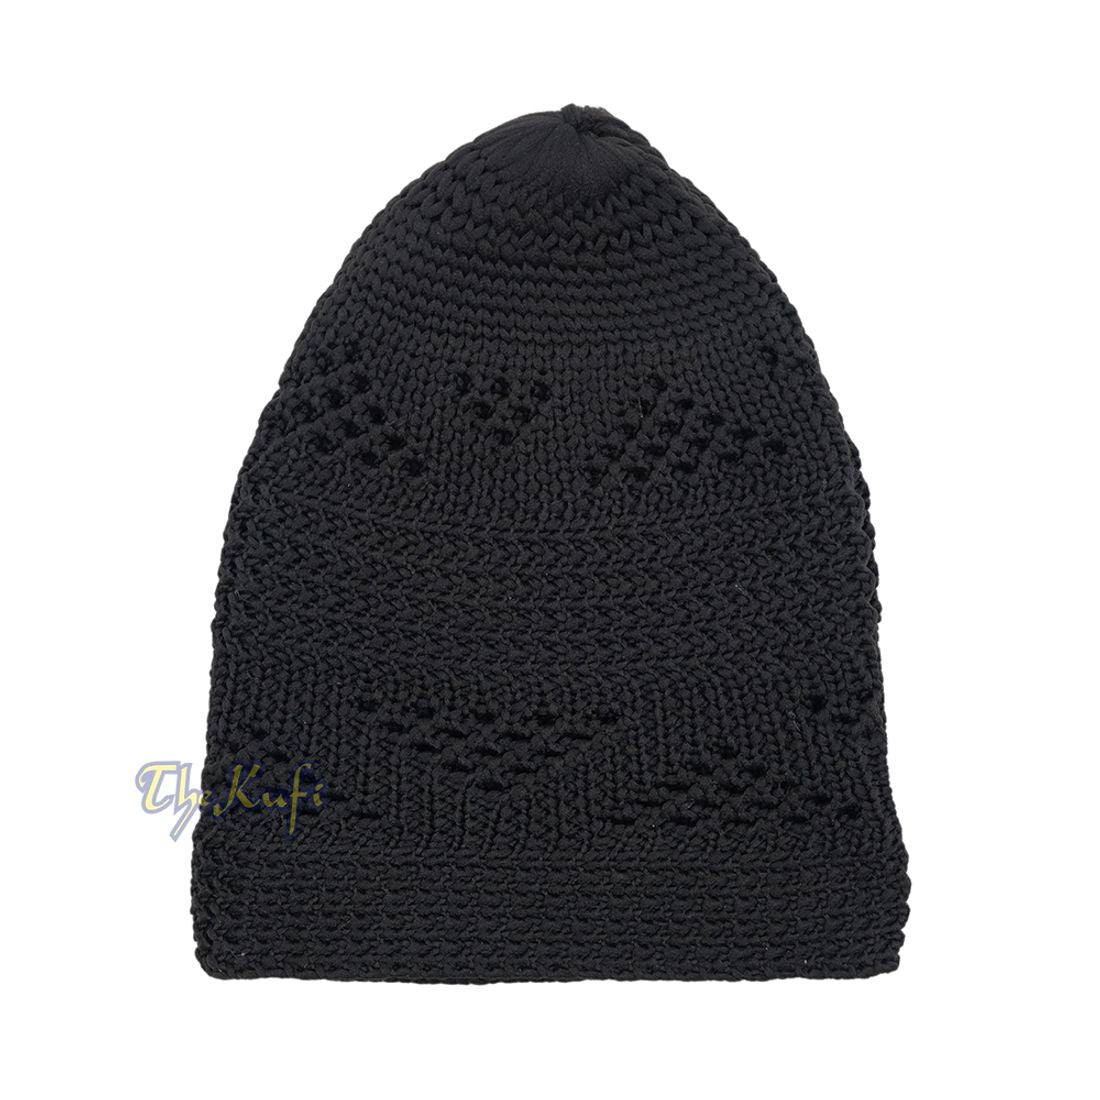 Plain Black Interwoven Triangle Design Nylon Kufi Hat